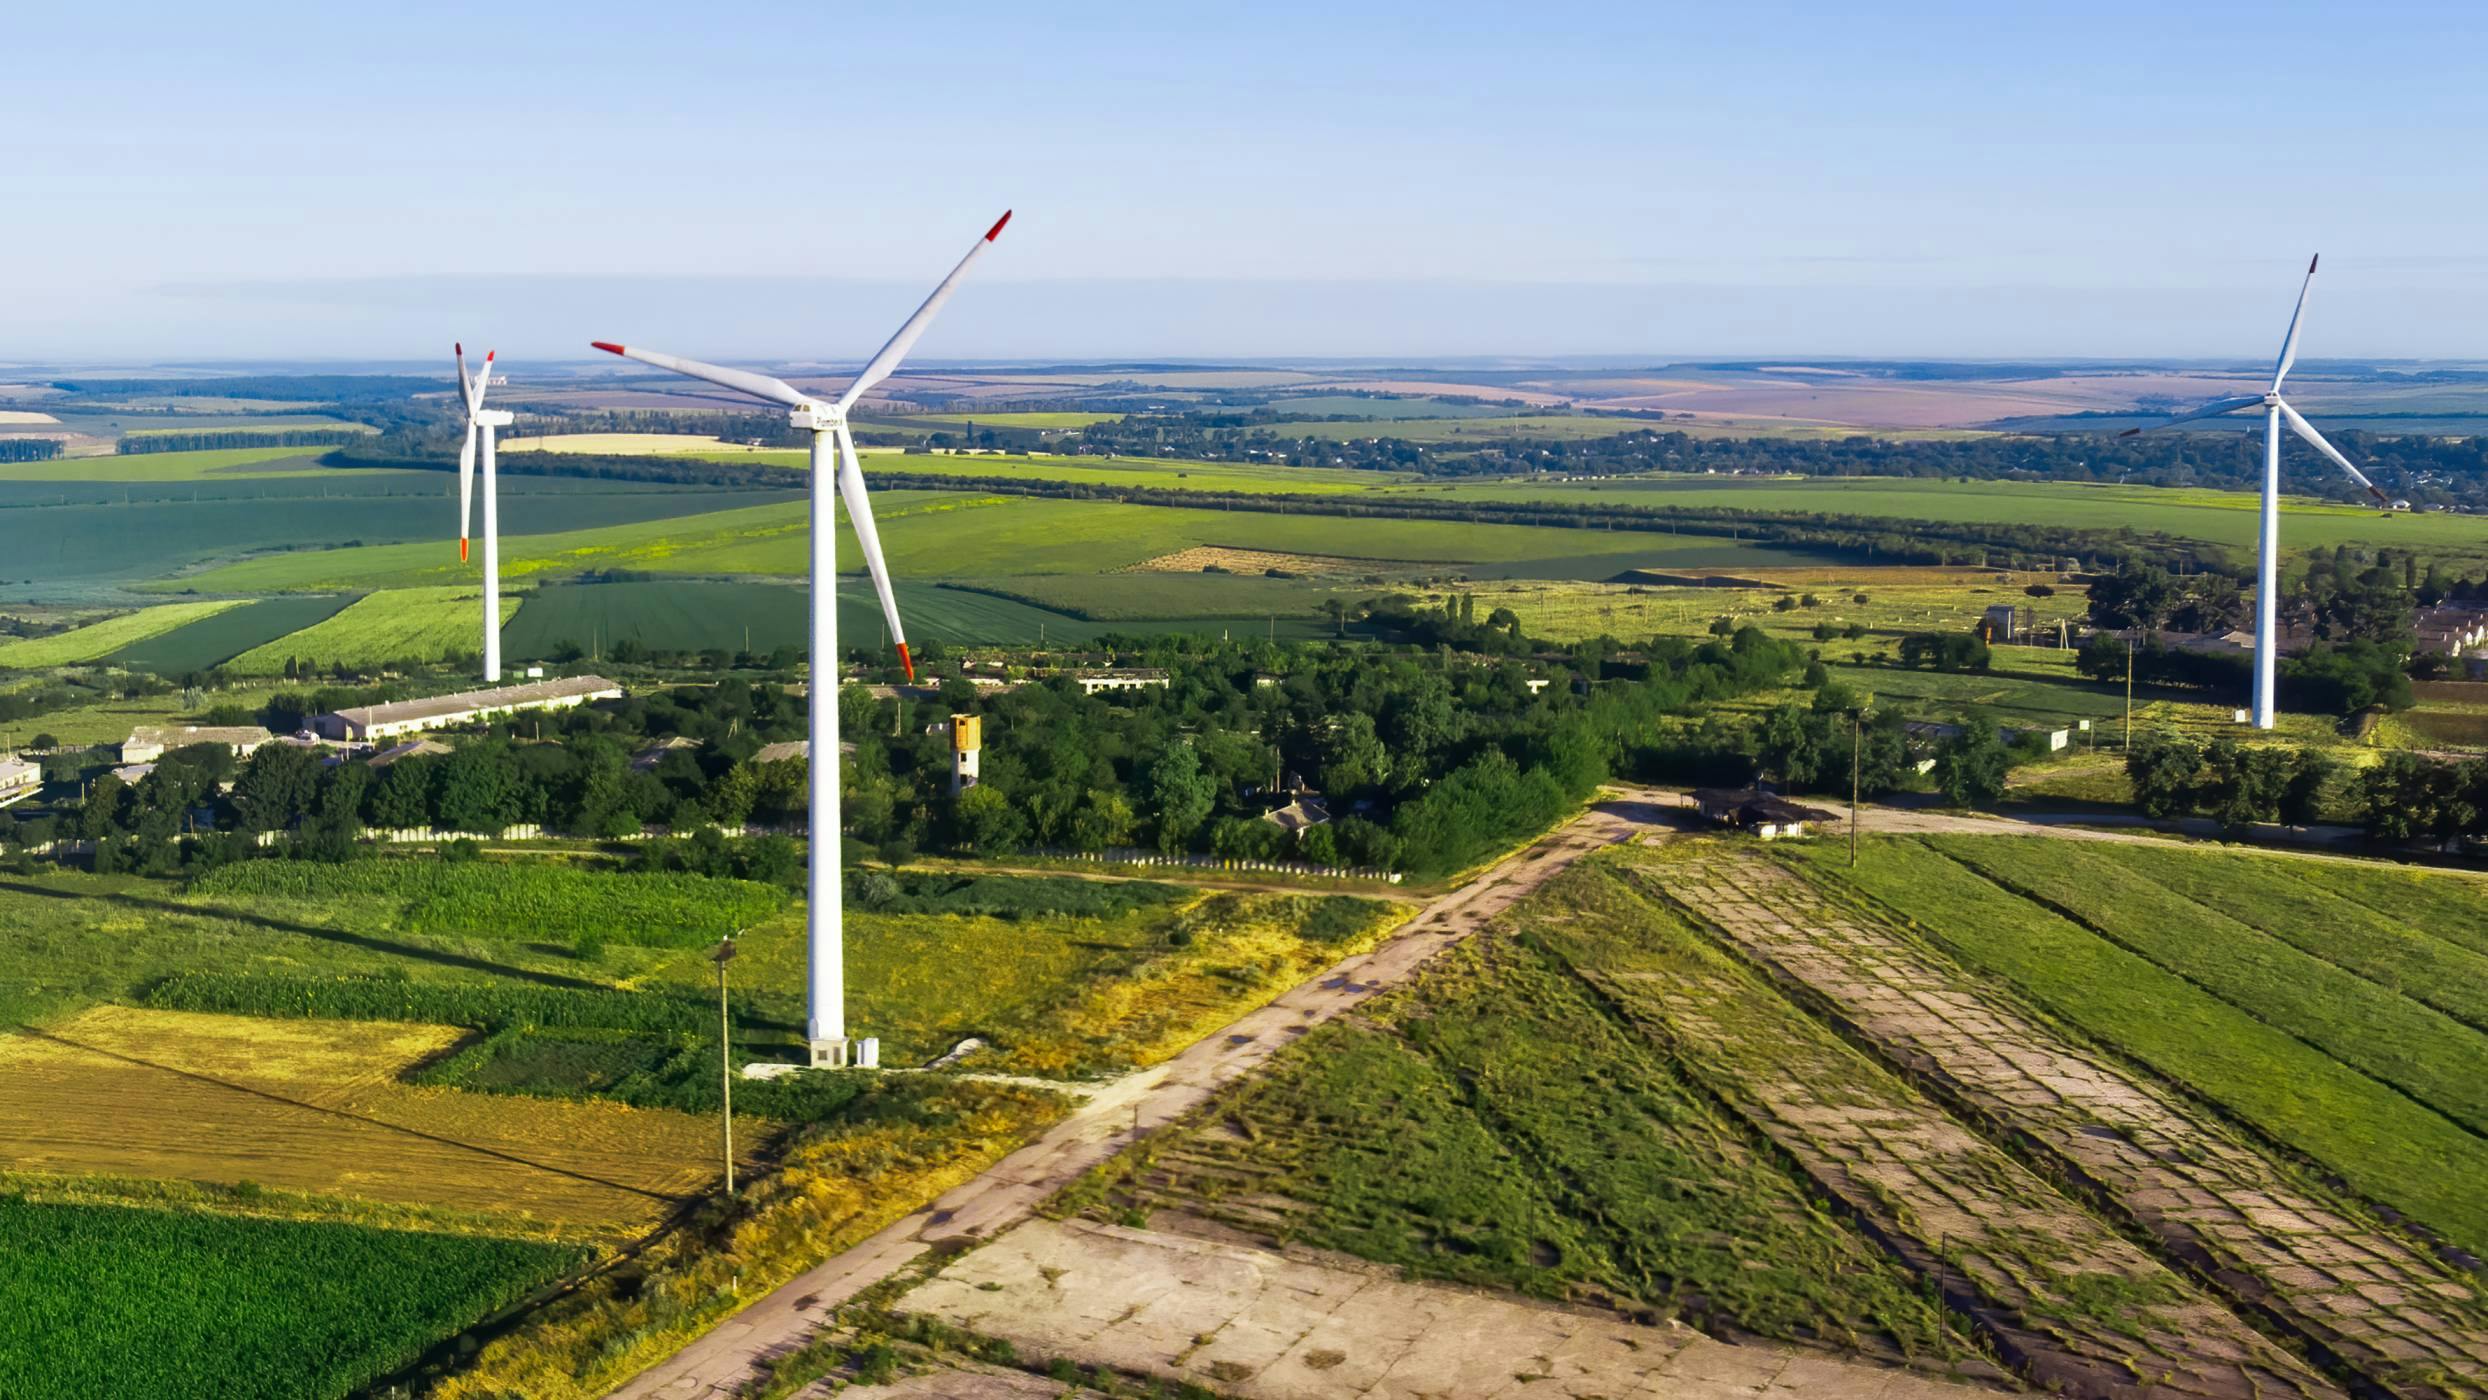 Uruguay's renewable energy transition